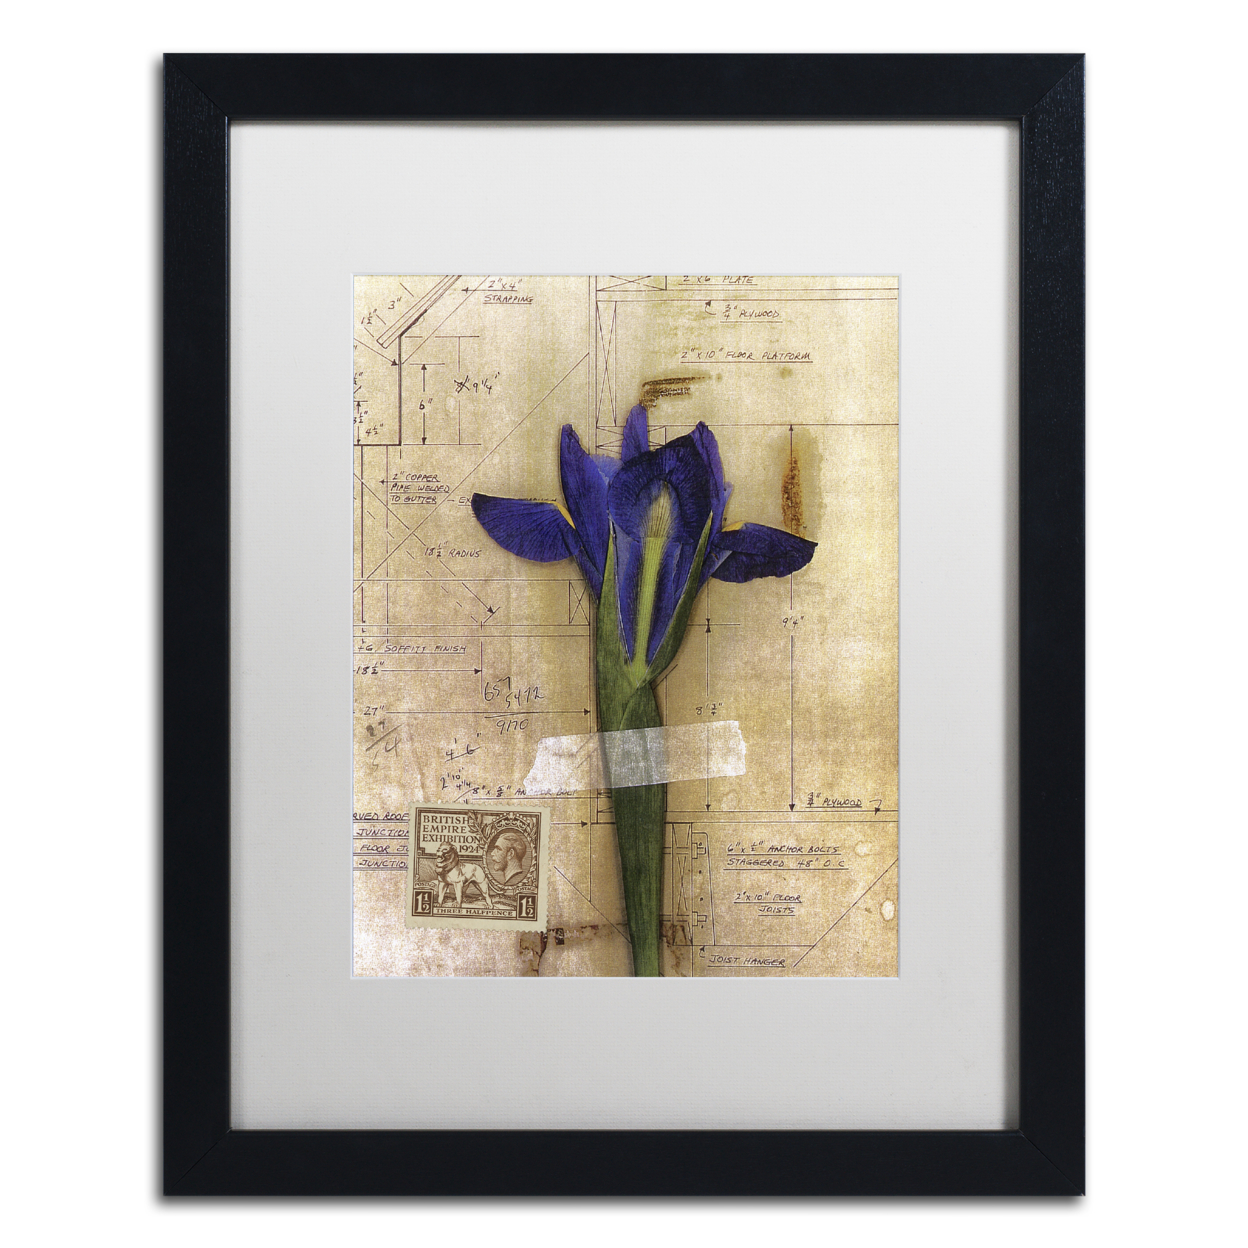 Nick Bantock 'Iris Plan' Black Wooden Framed Art 18 X 22 Inches